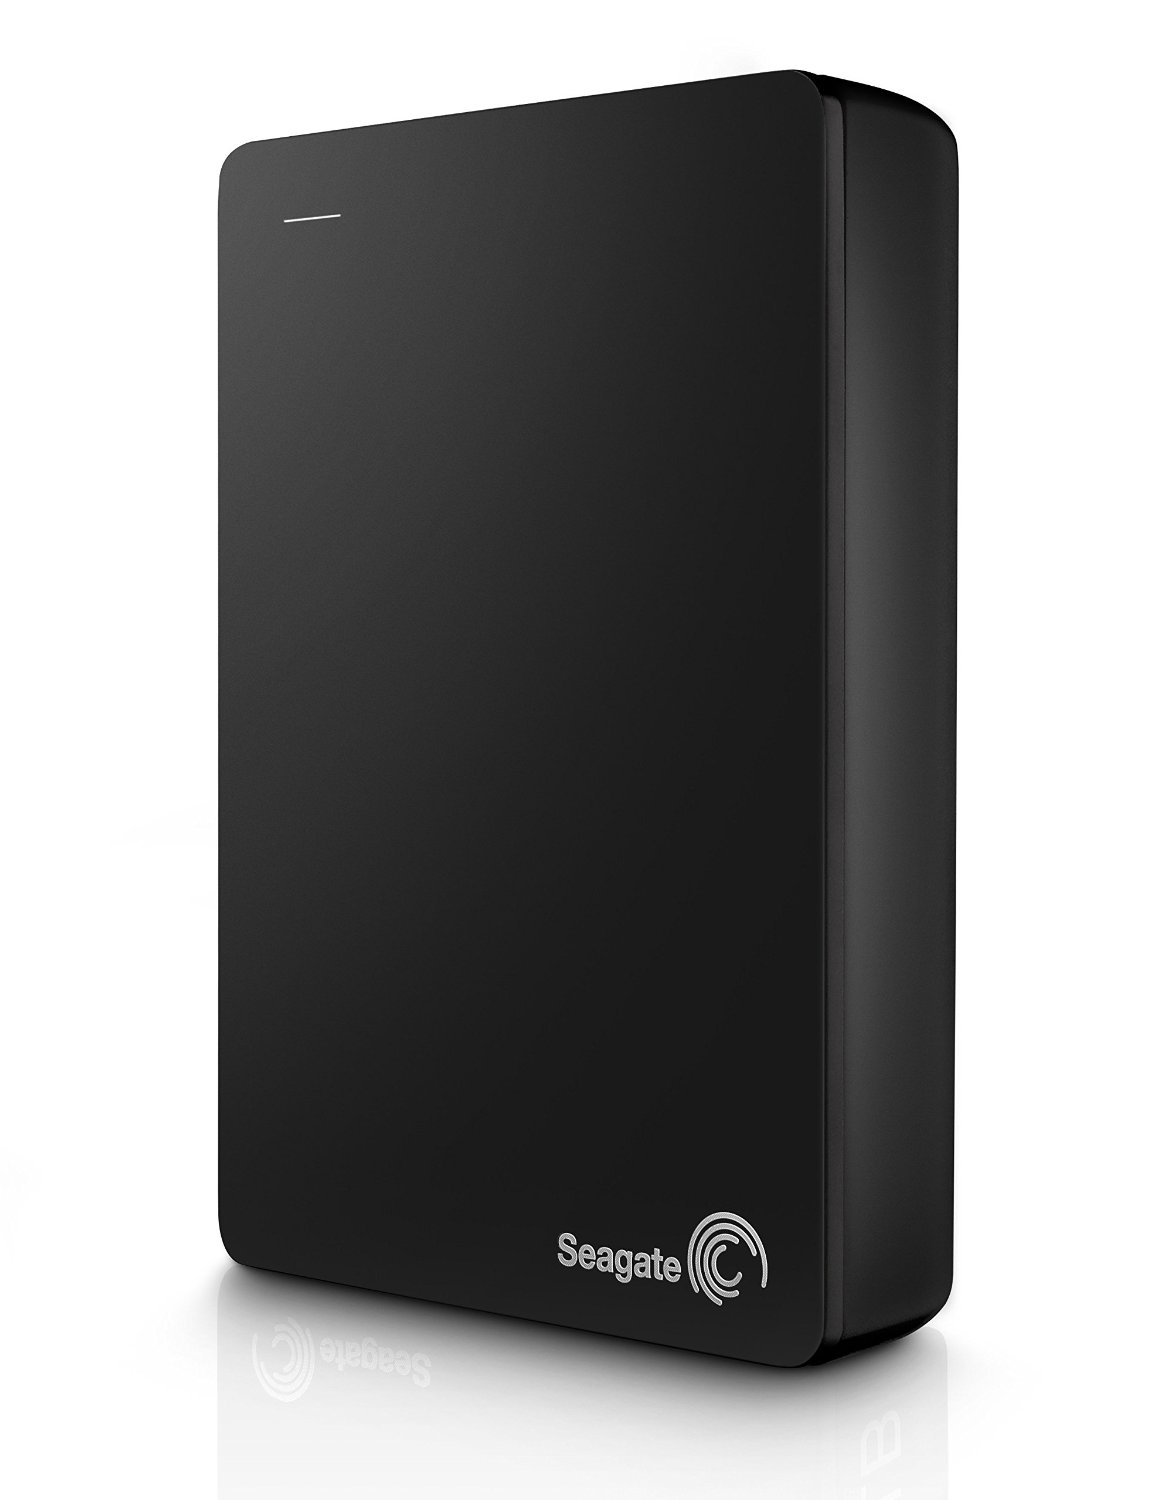 6. Seagate Backup Plus Fast Portable External Hard Drive (4TB)